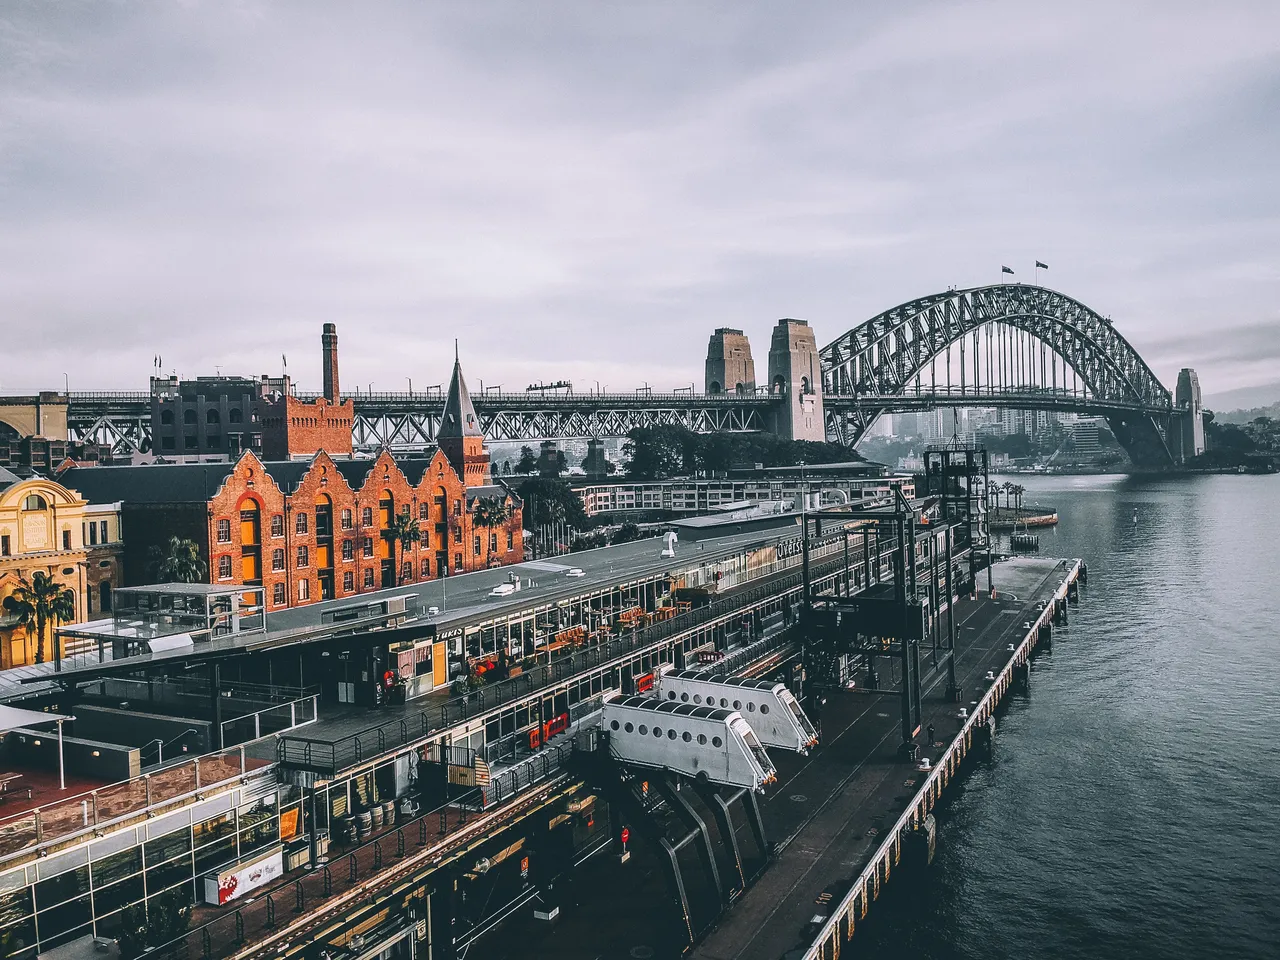 Sydney Bridge of Australia. Photo Source - unsplash.com